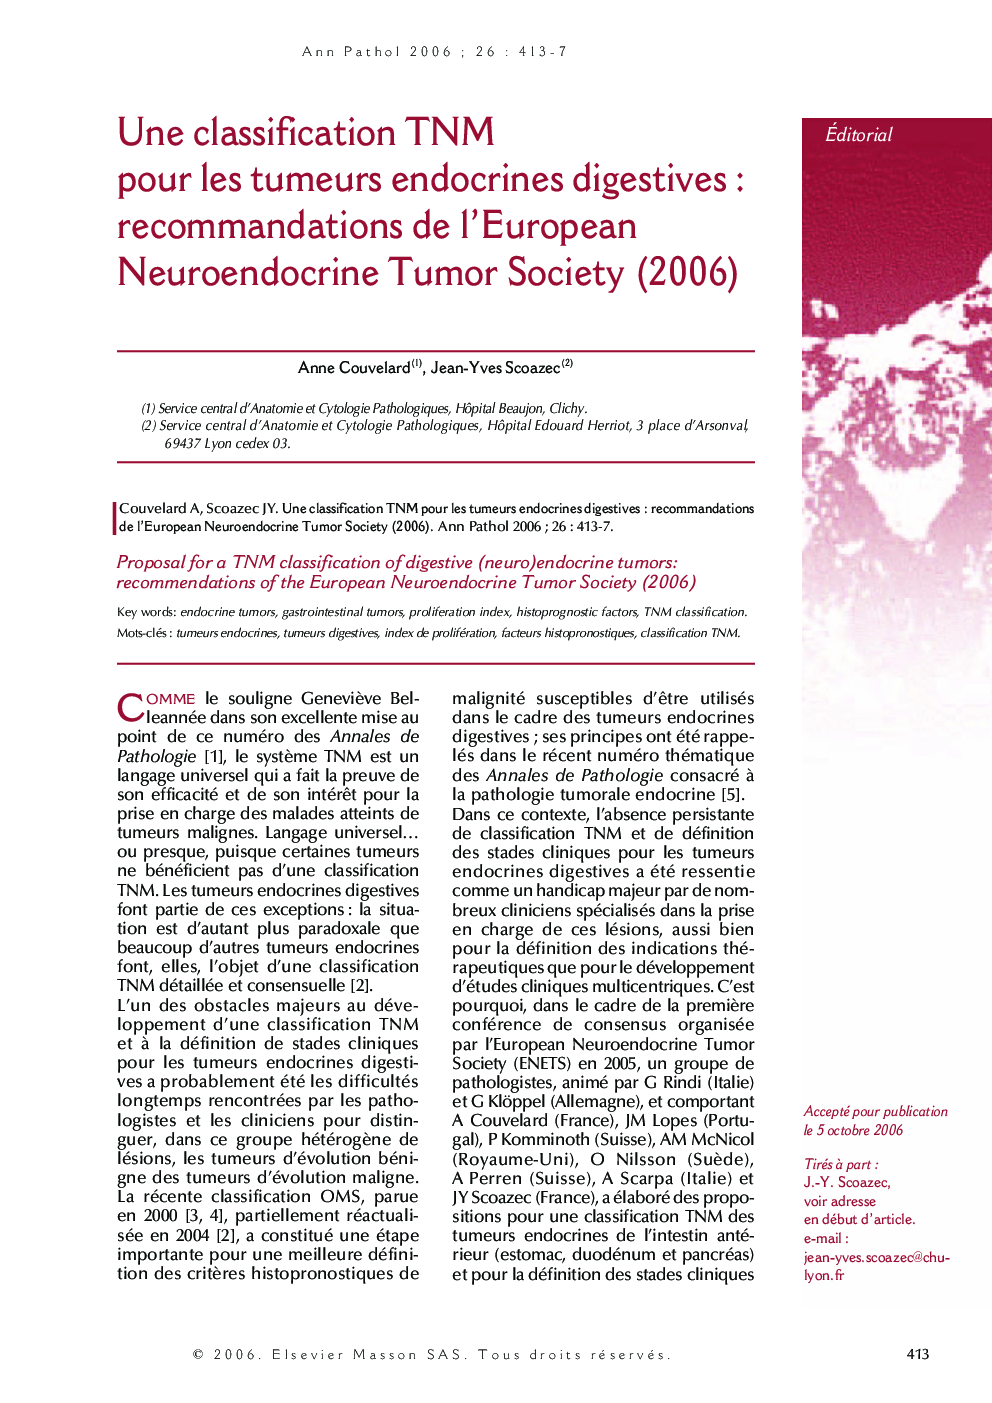 Une classification TNM pour les tumeurs endocrines digestives: recommandations de l'European Neuroendocrine Tumor Society (2006)